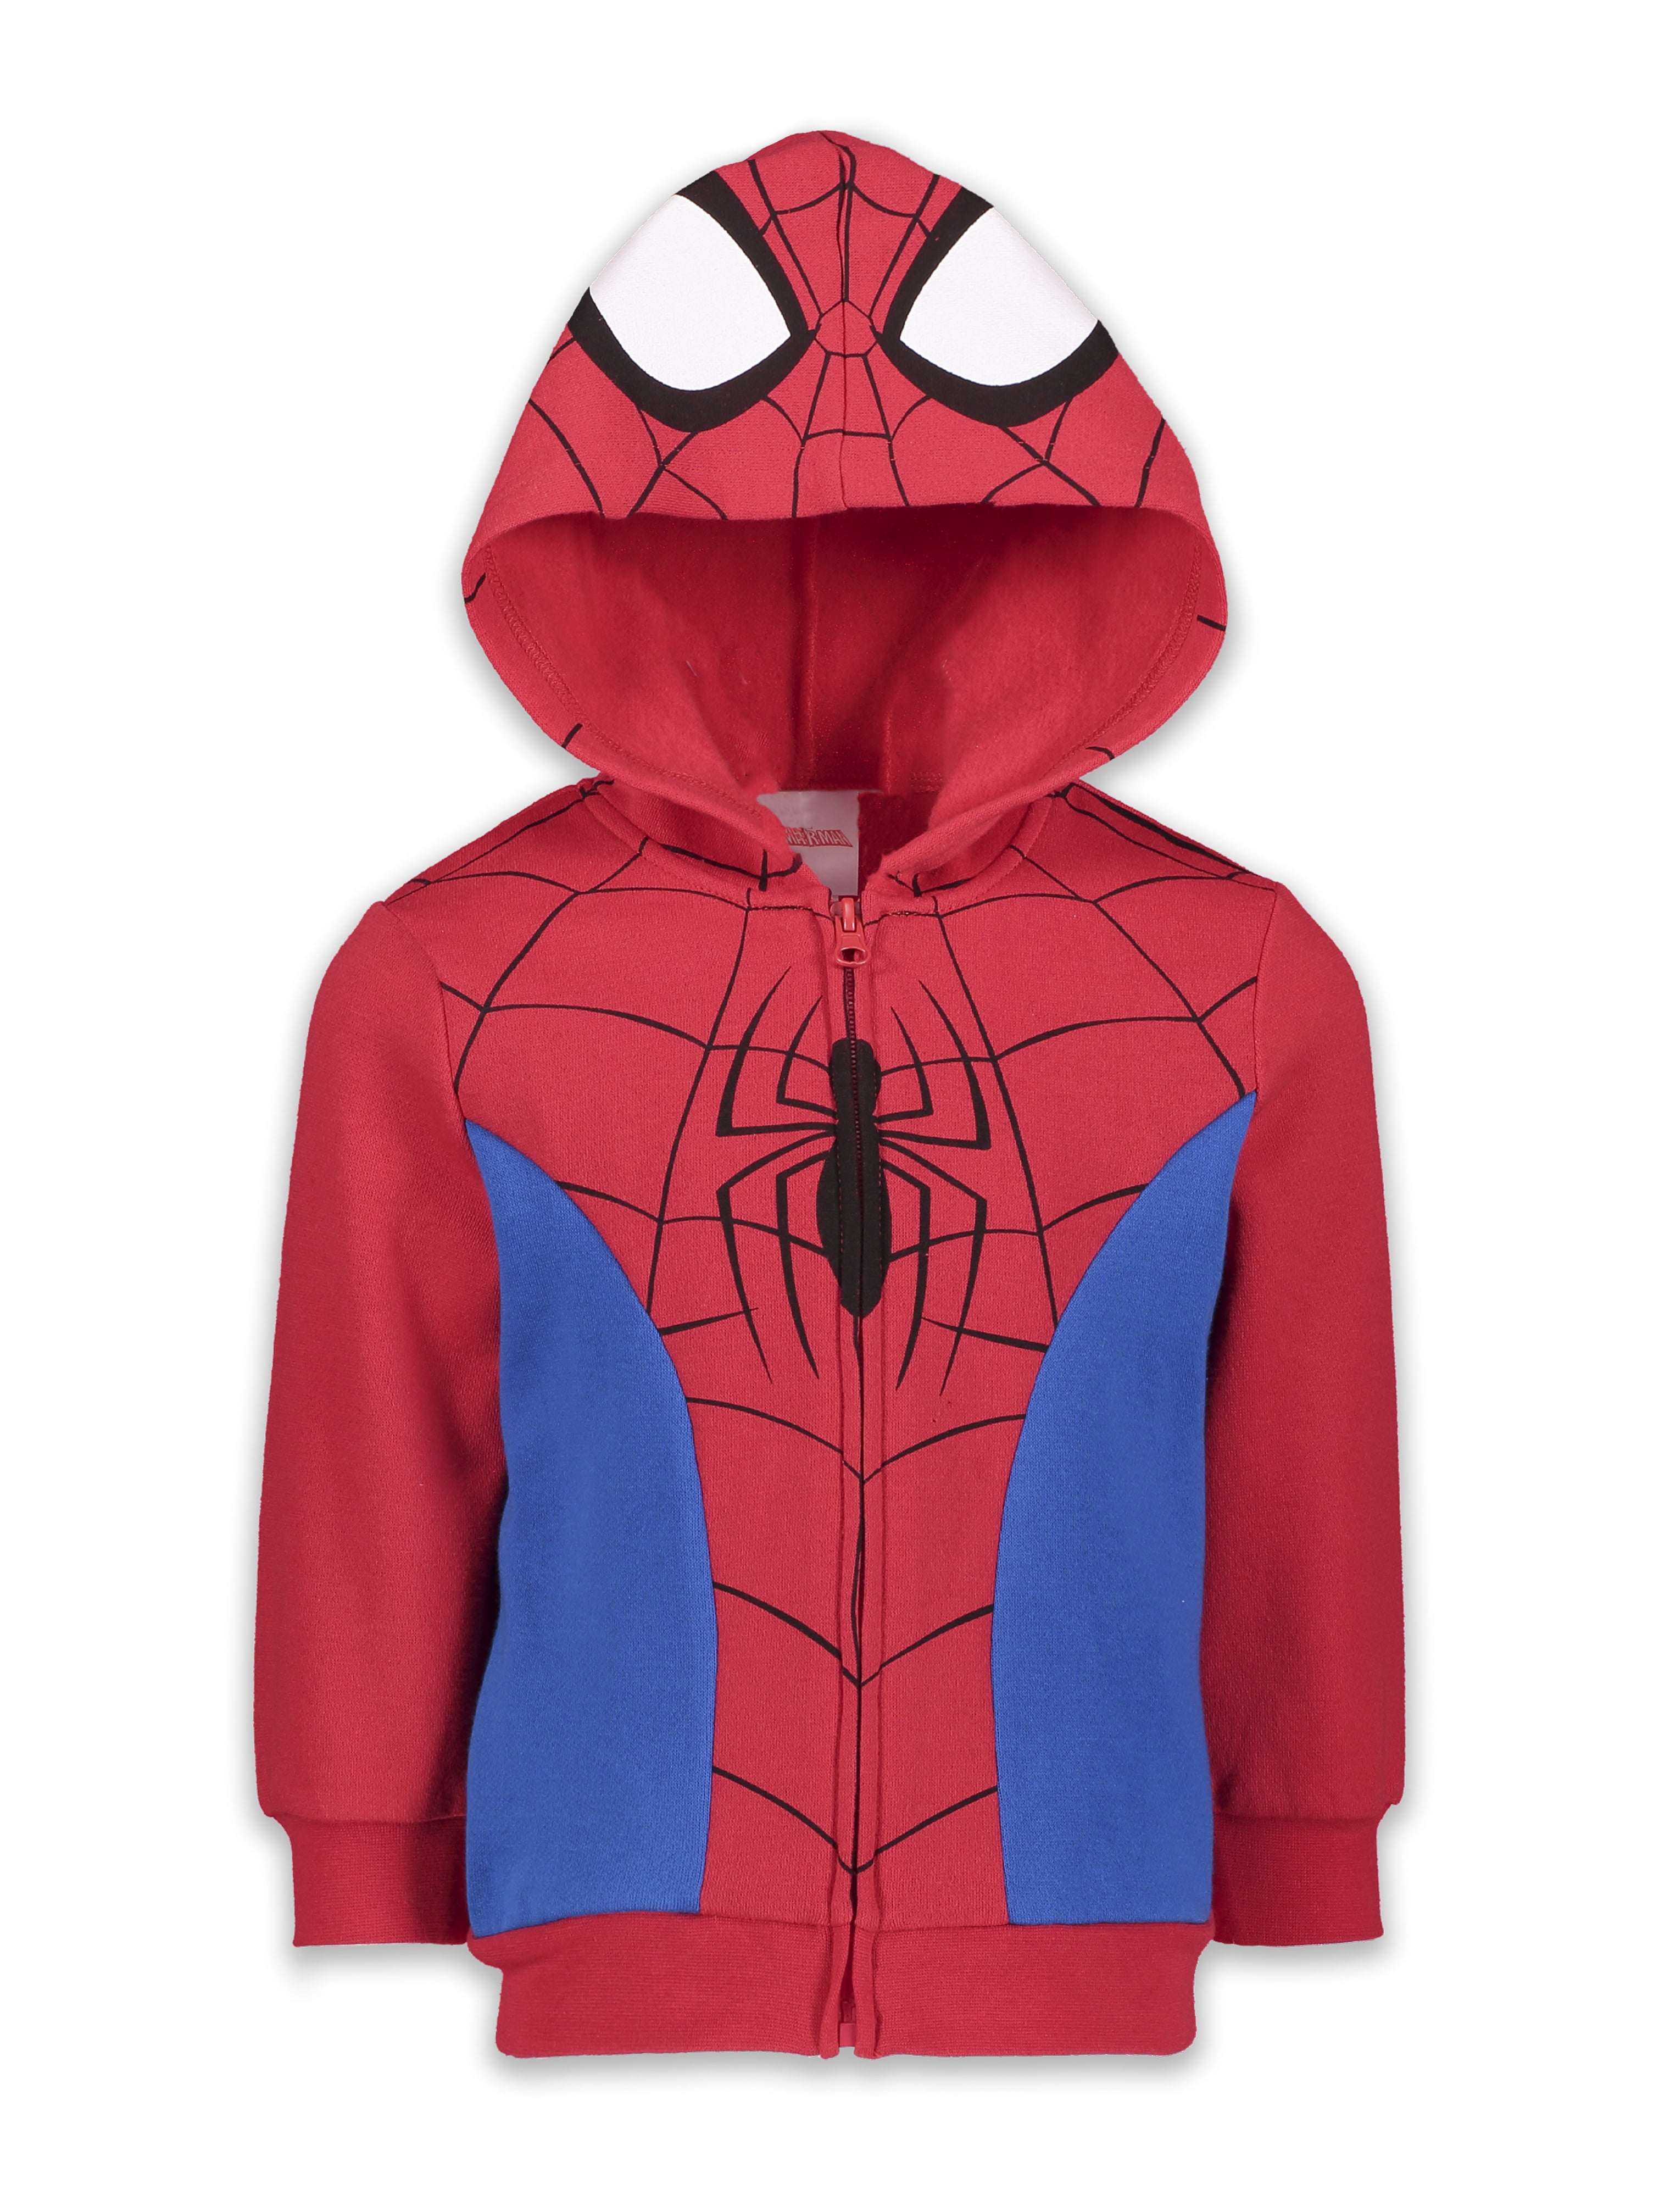 Ghost-Spider Costume Zip Hoodie for Kids